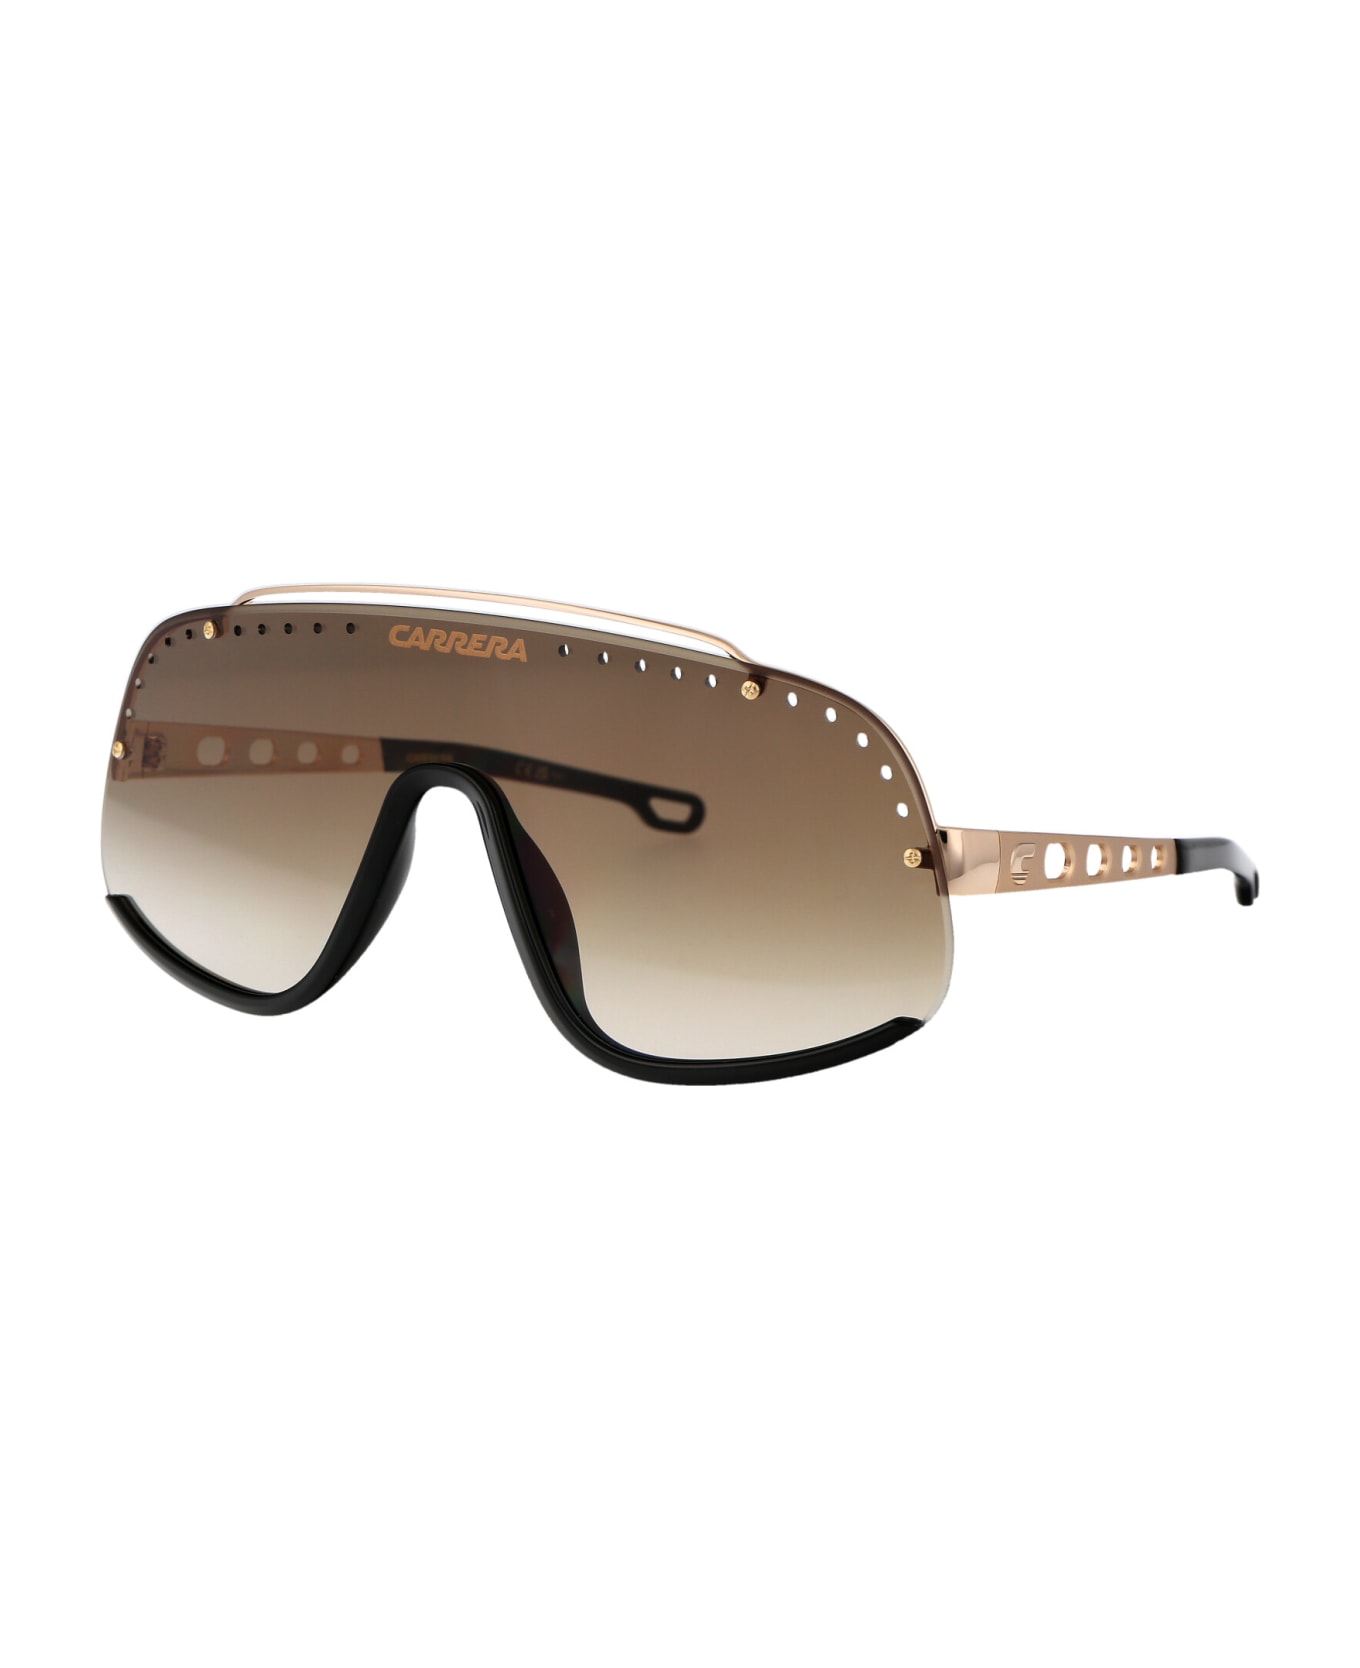 Carrera Flaglab 16 Sunglasses - FG486 BRWNGOLD B サングラス